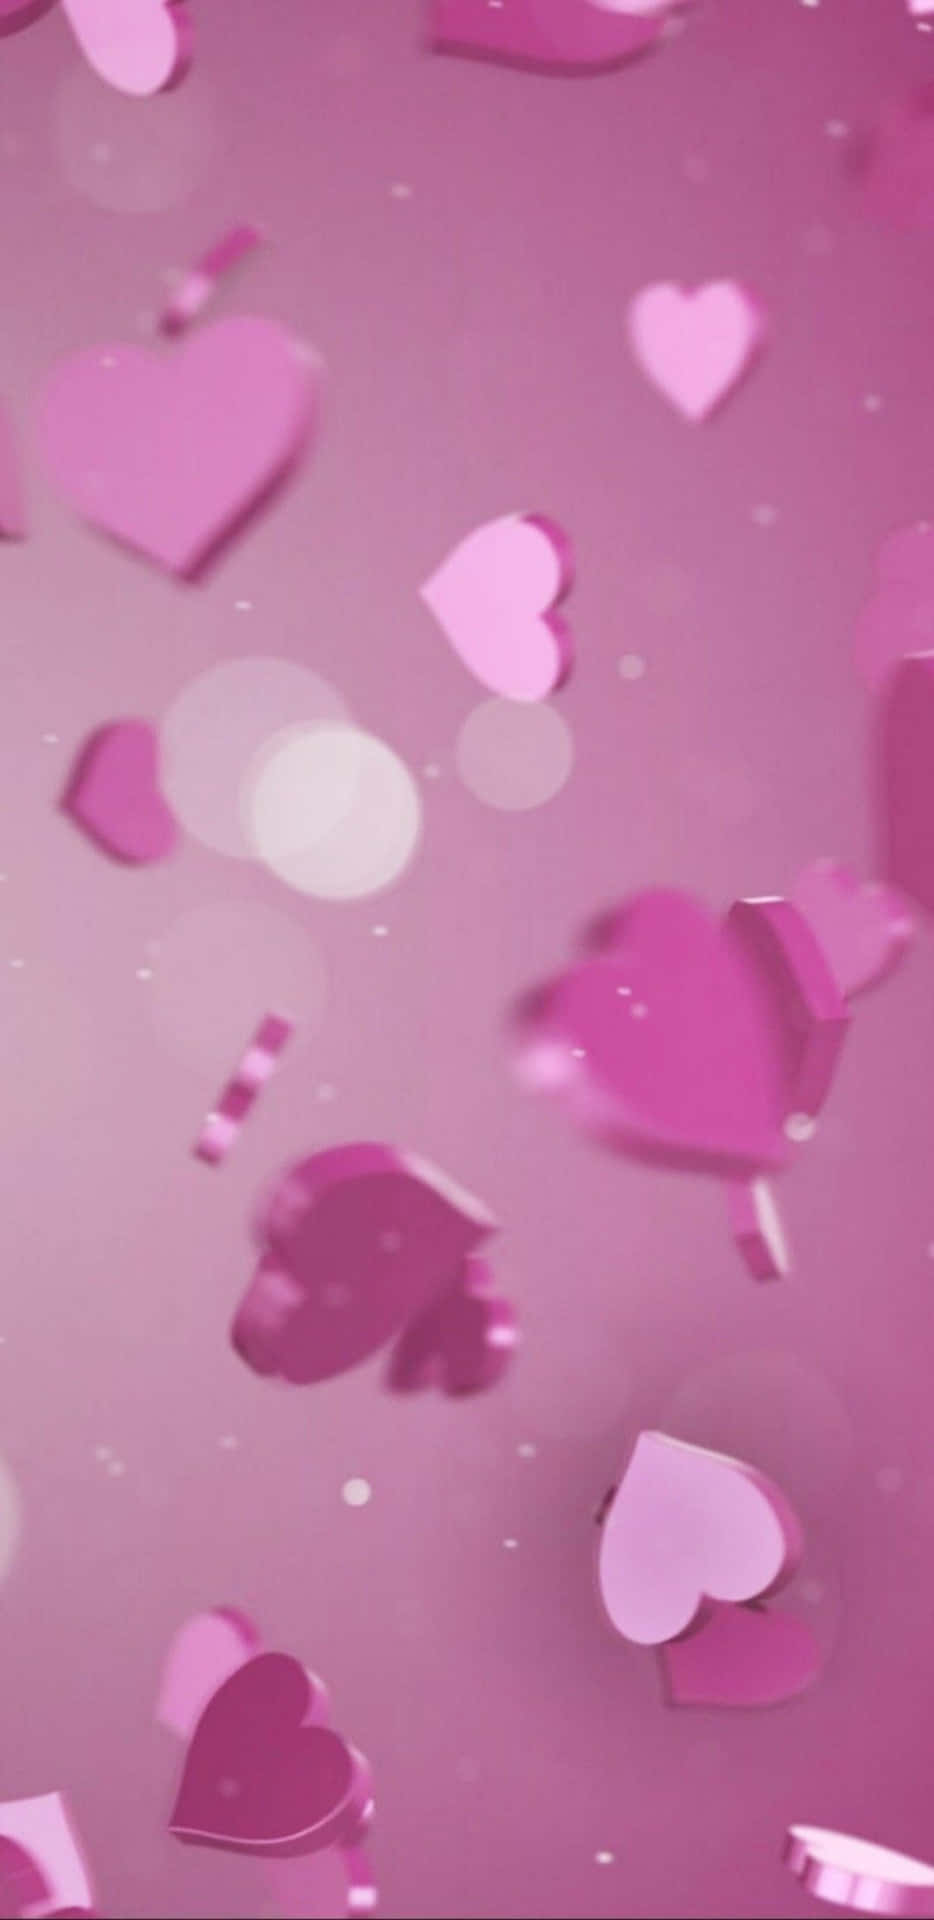 Falling Shiny Pink Hearts Iphone Wallpaper